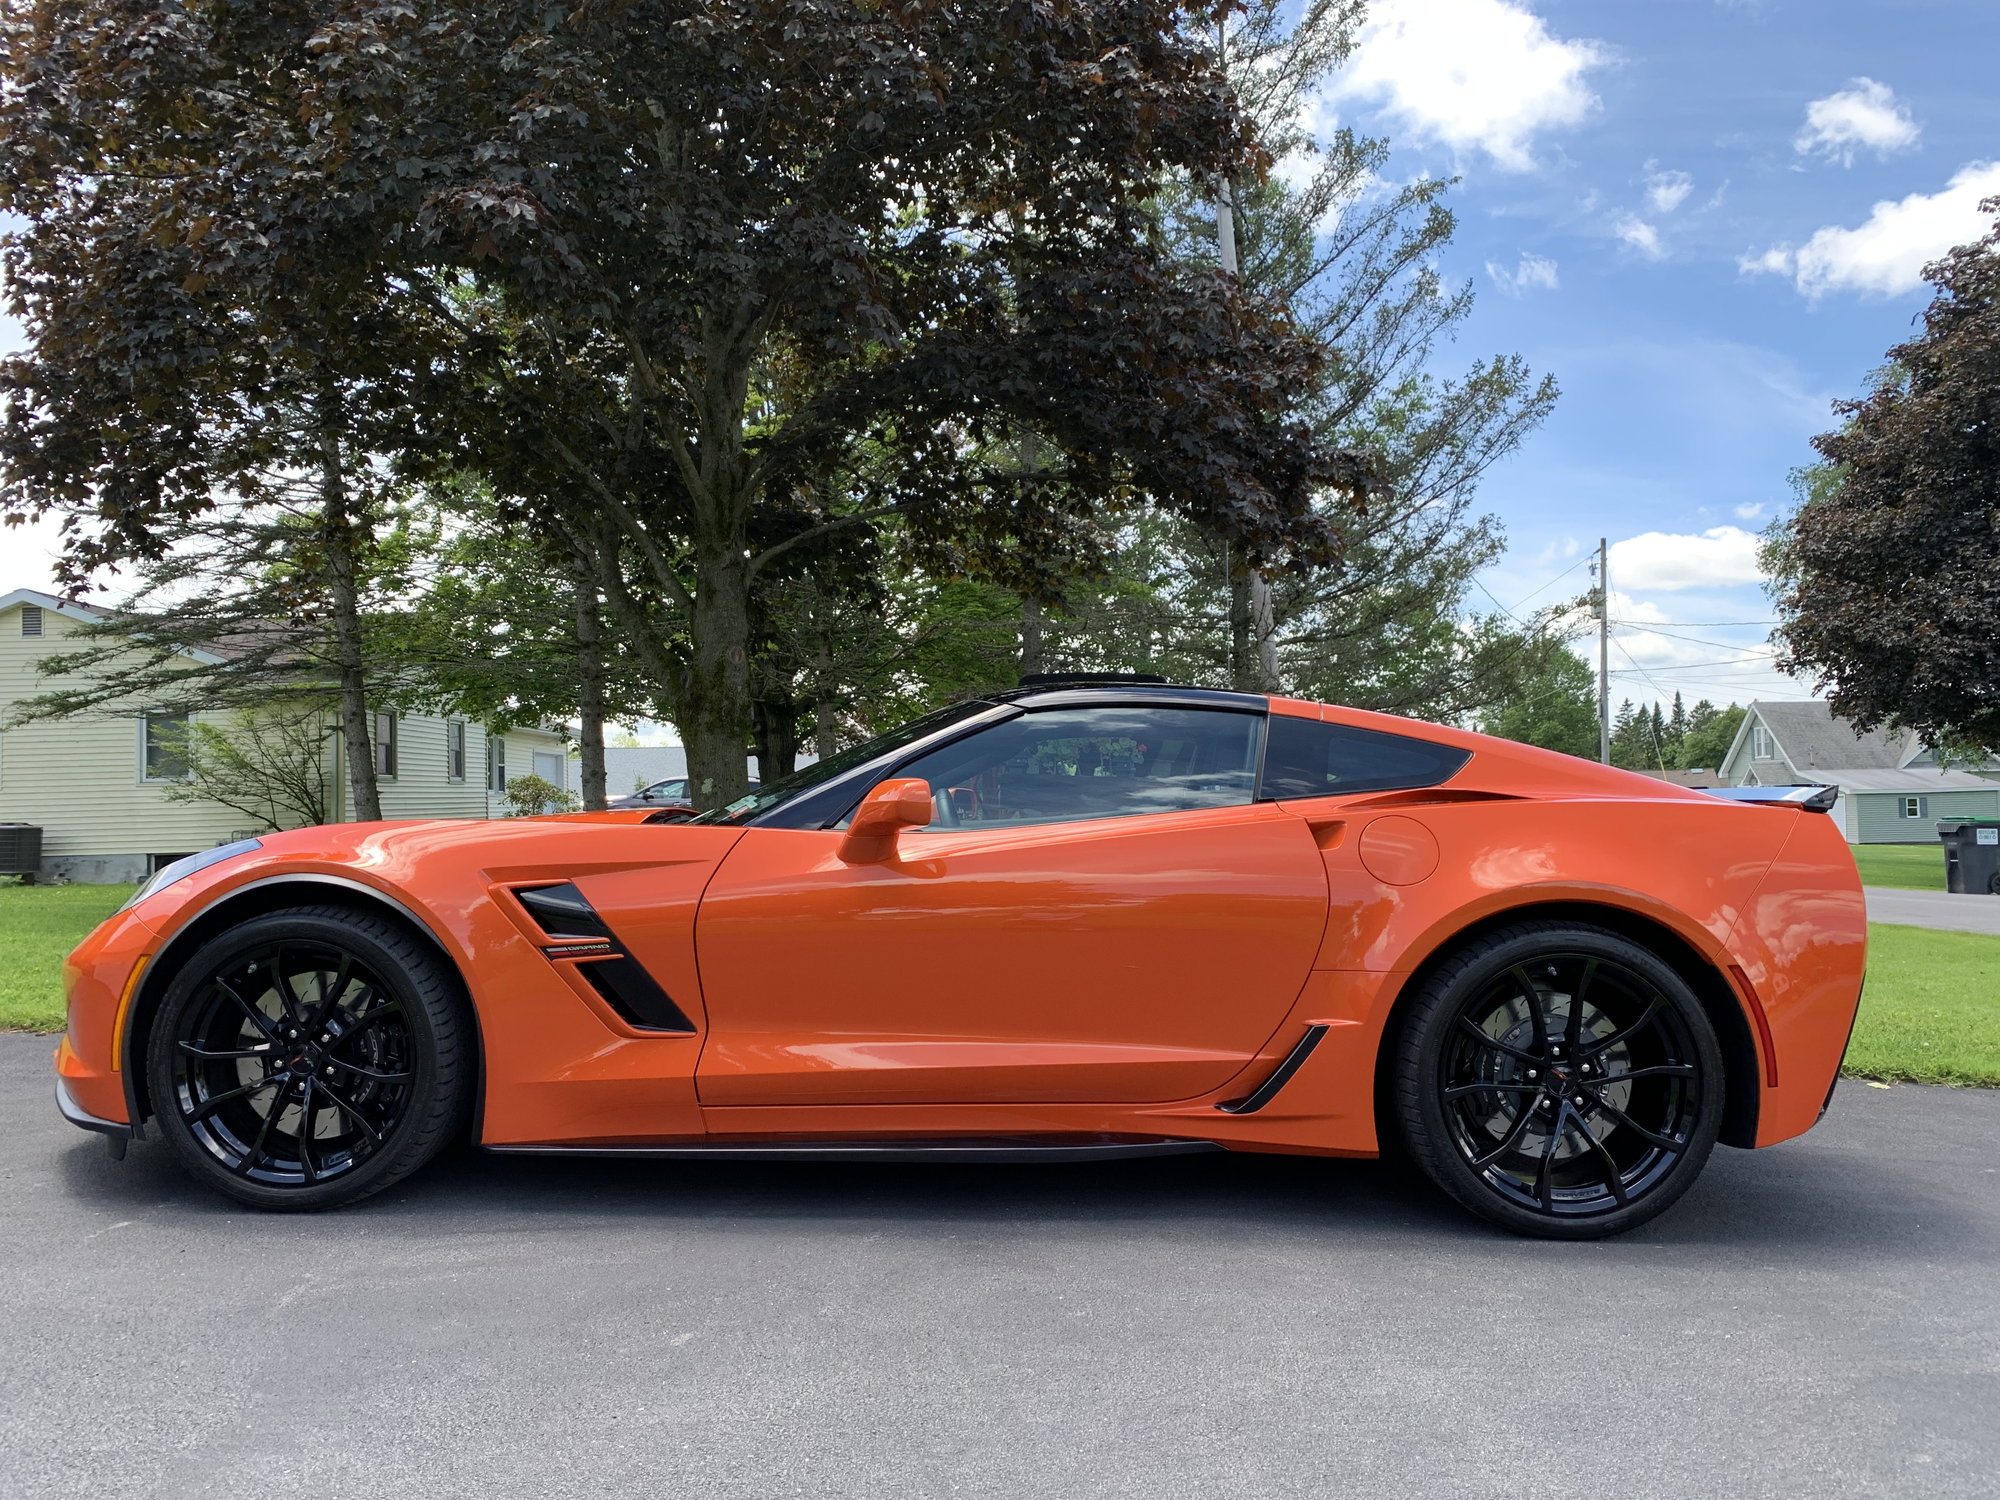 FS (For Sale) 2019 Grand Sport Sebring Orange ...
